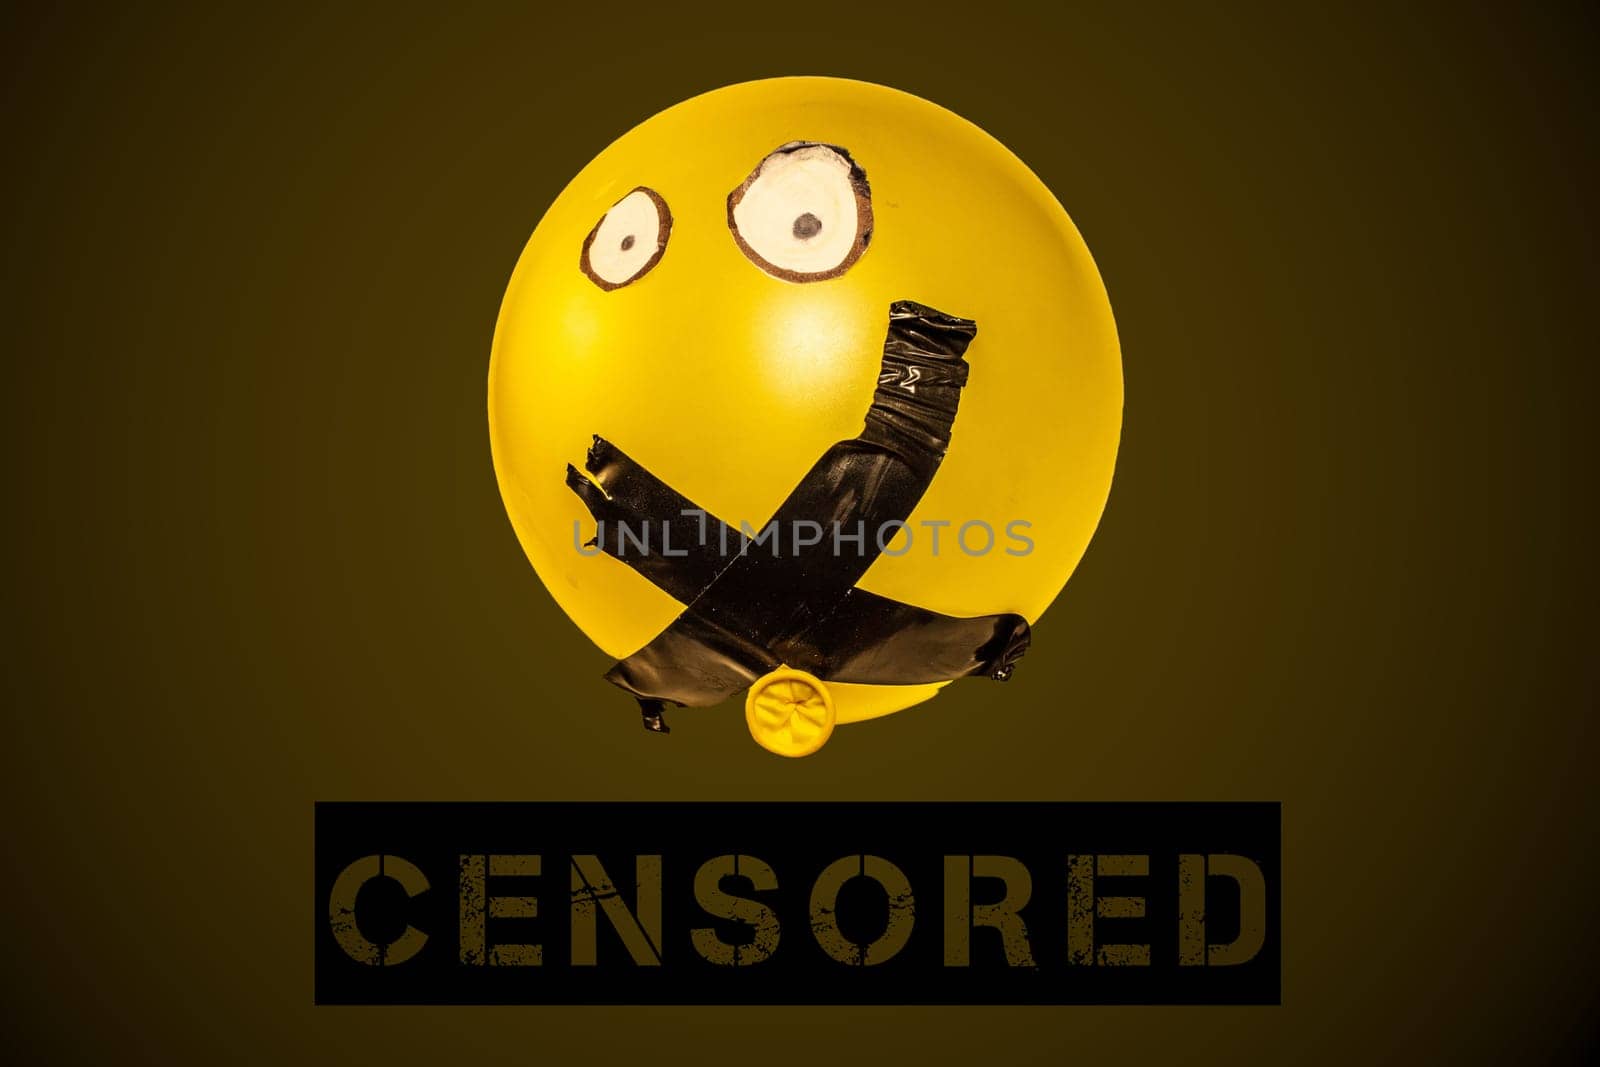 Silenced Expression. Censored Balloon. Freedom of speech by DakotaBOldeman